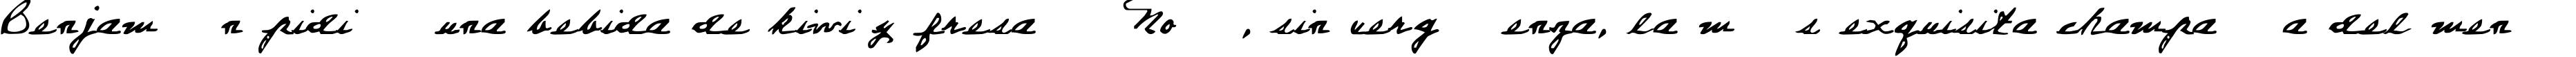 Пример написания шрифтом Everett Steele's Hand текста на испанском